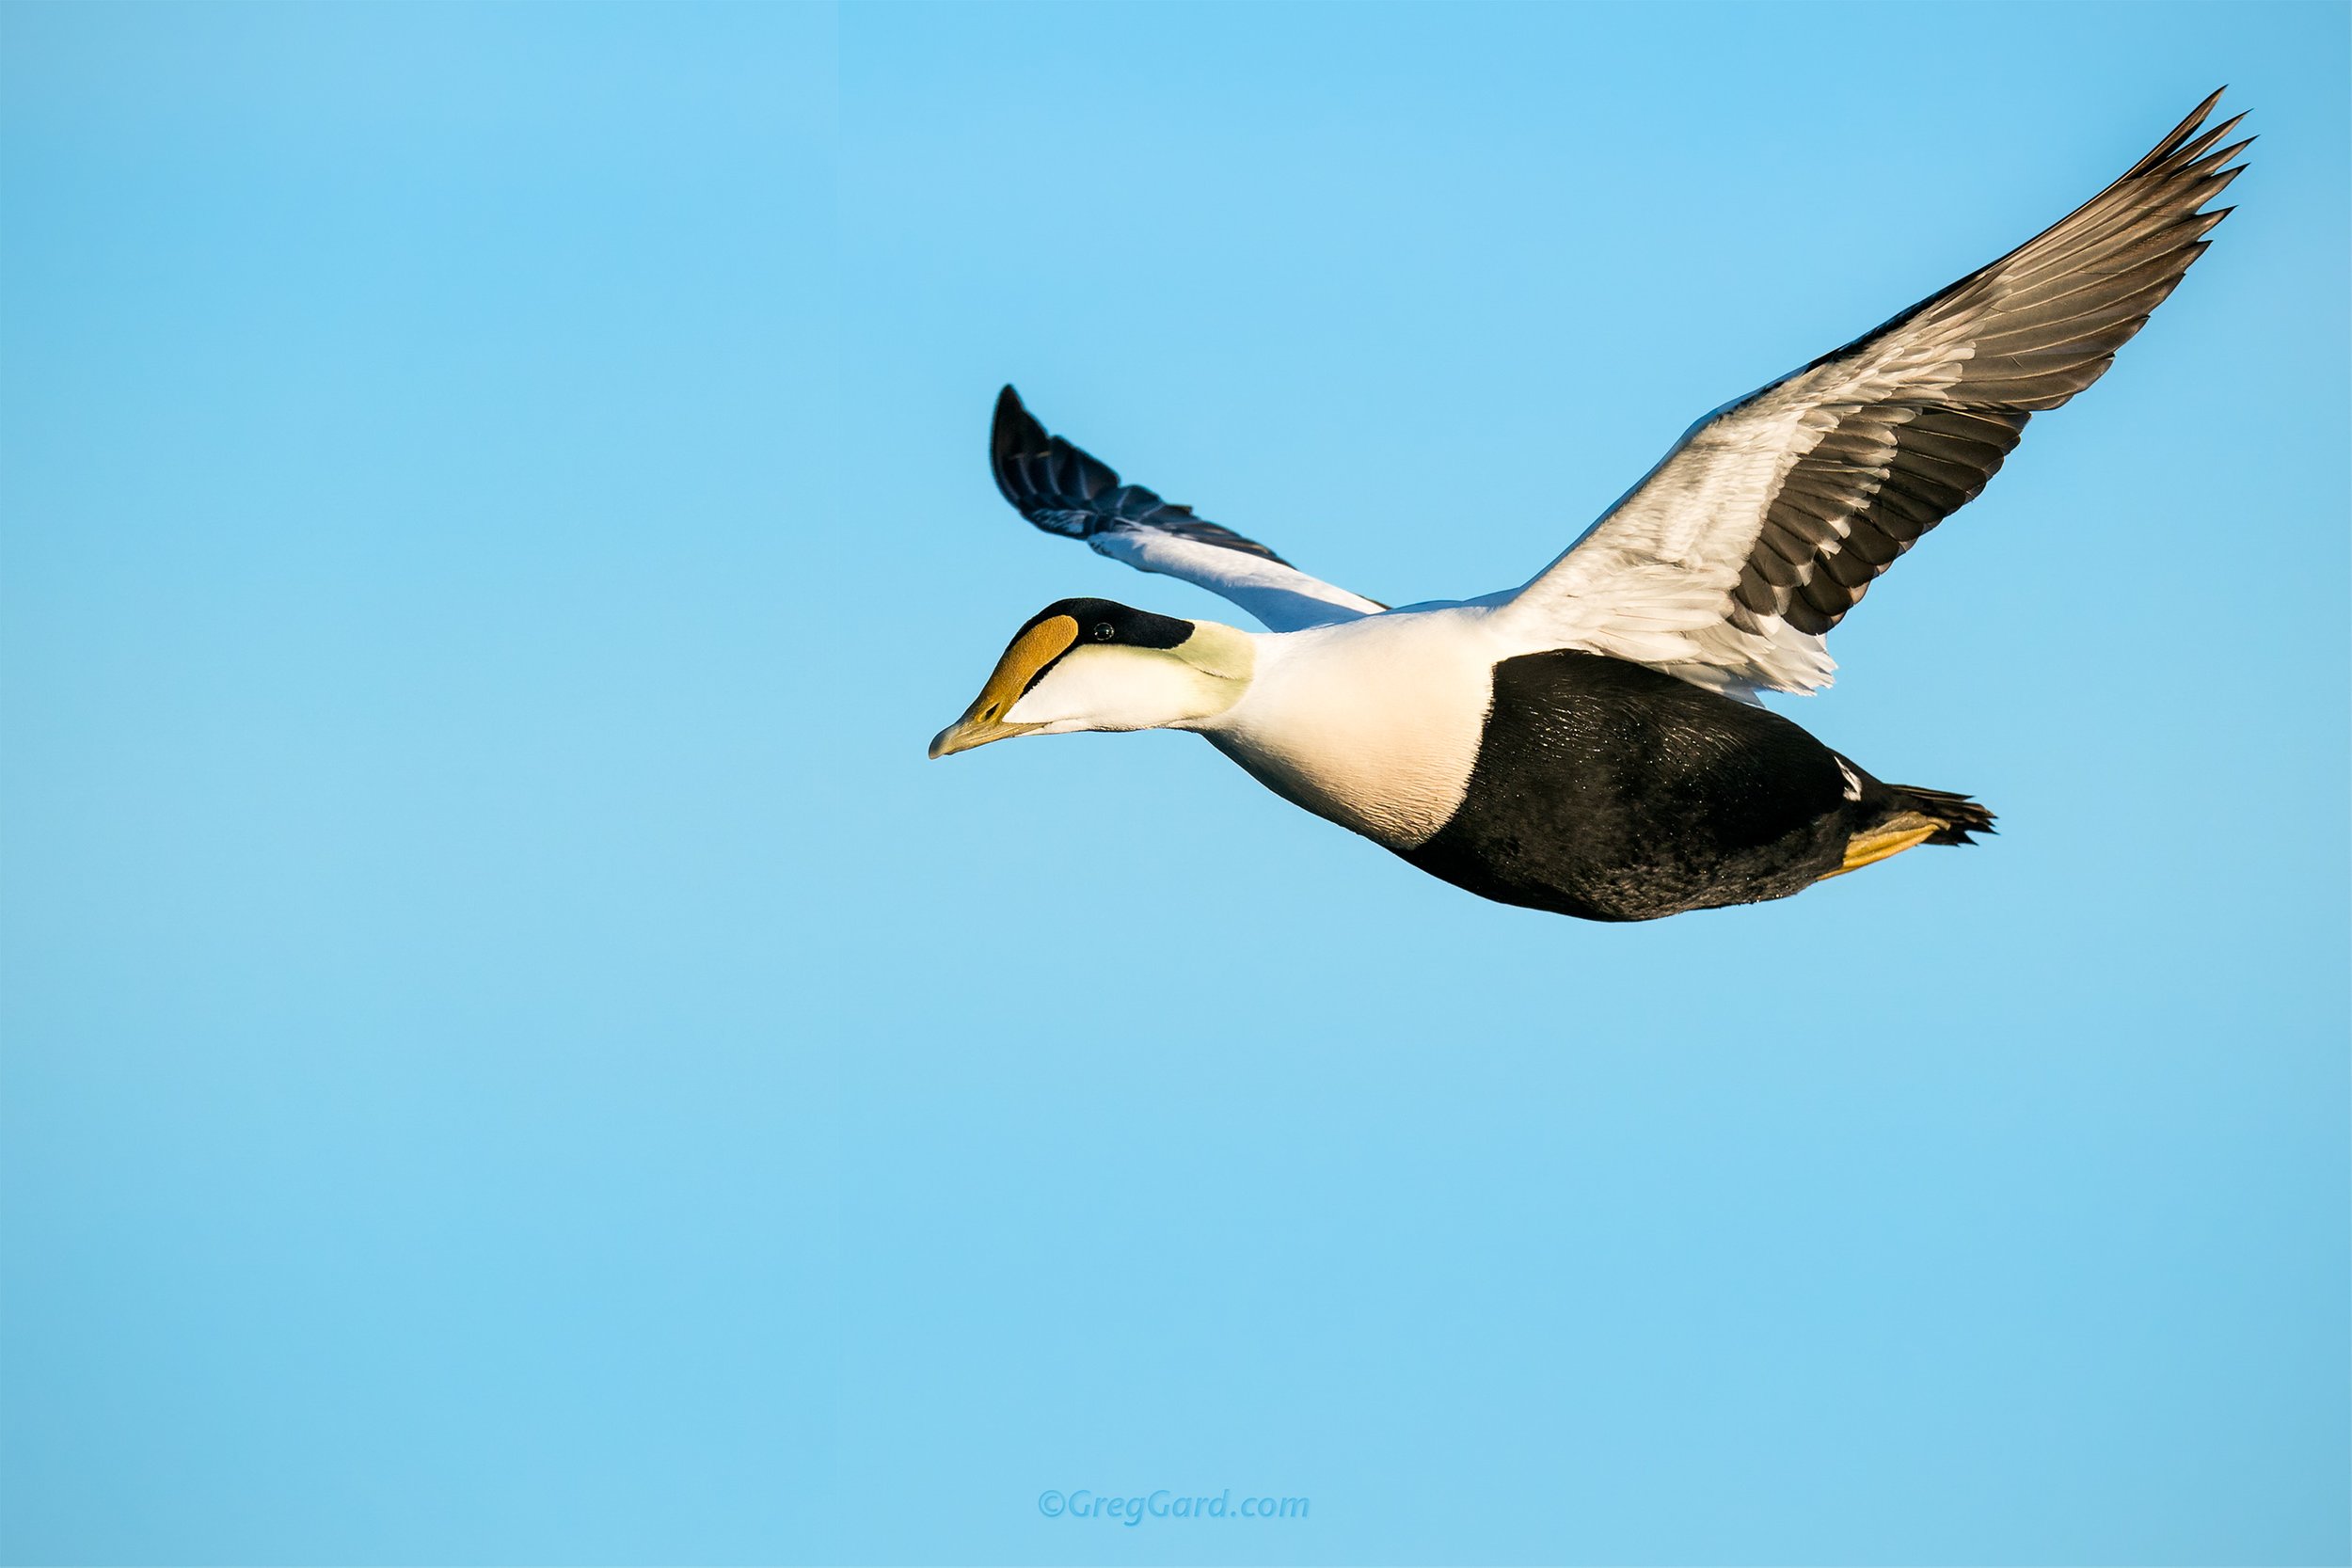 common-eider-adult-male-flying-nj-duck-photography-greg-gard-0222 copy.jpg